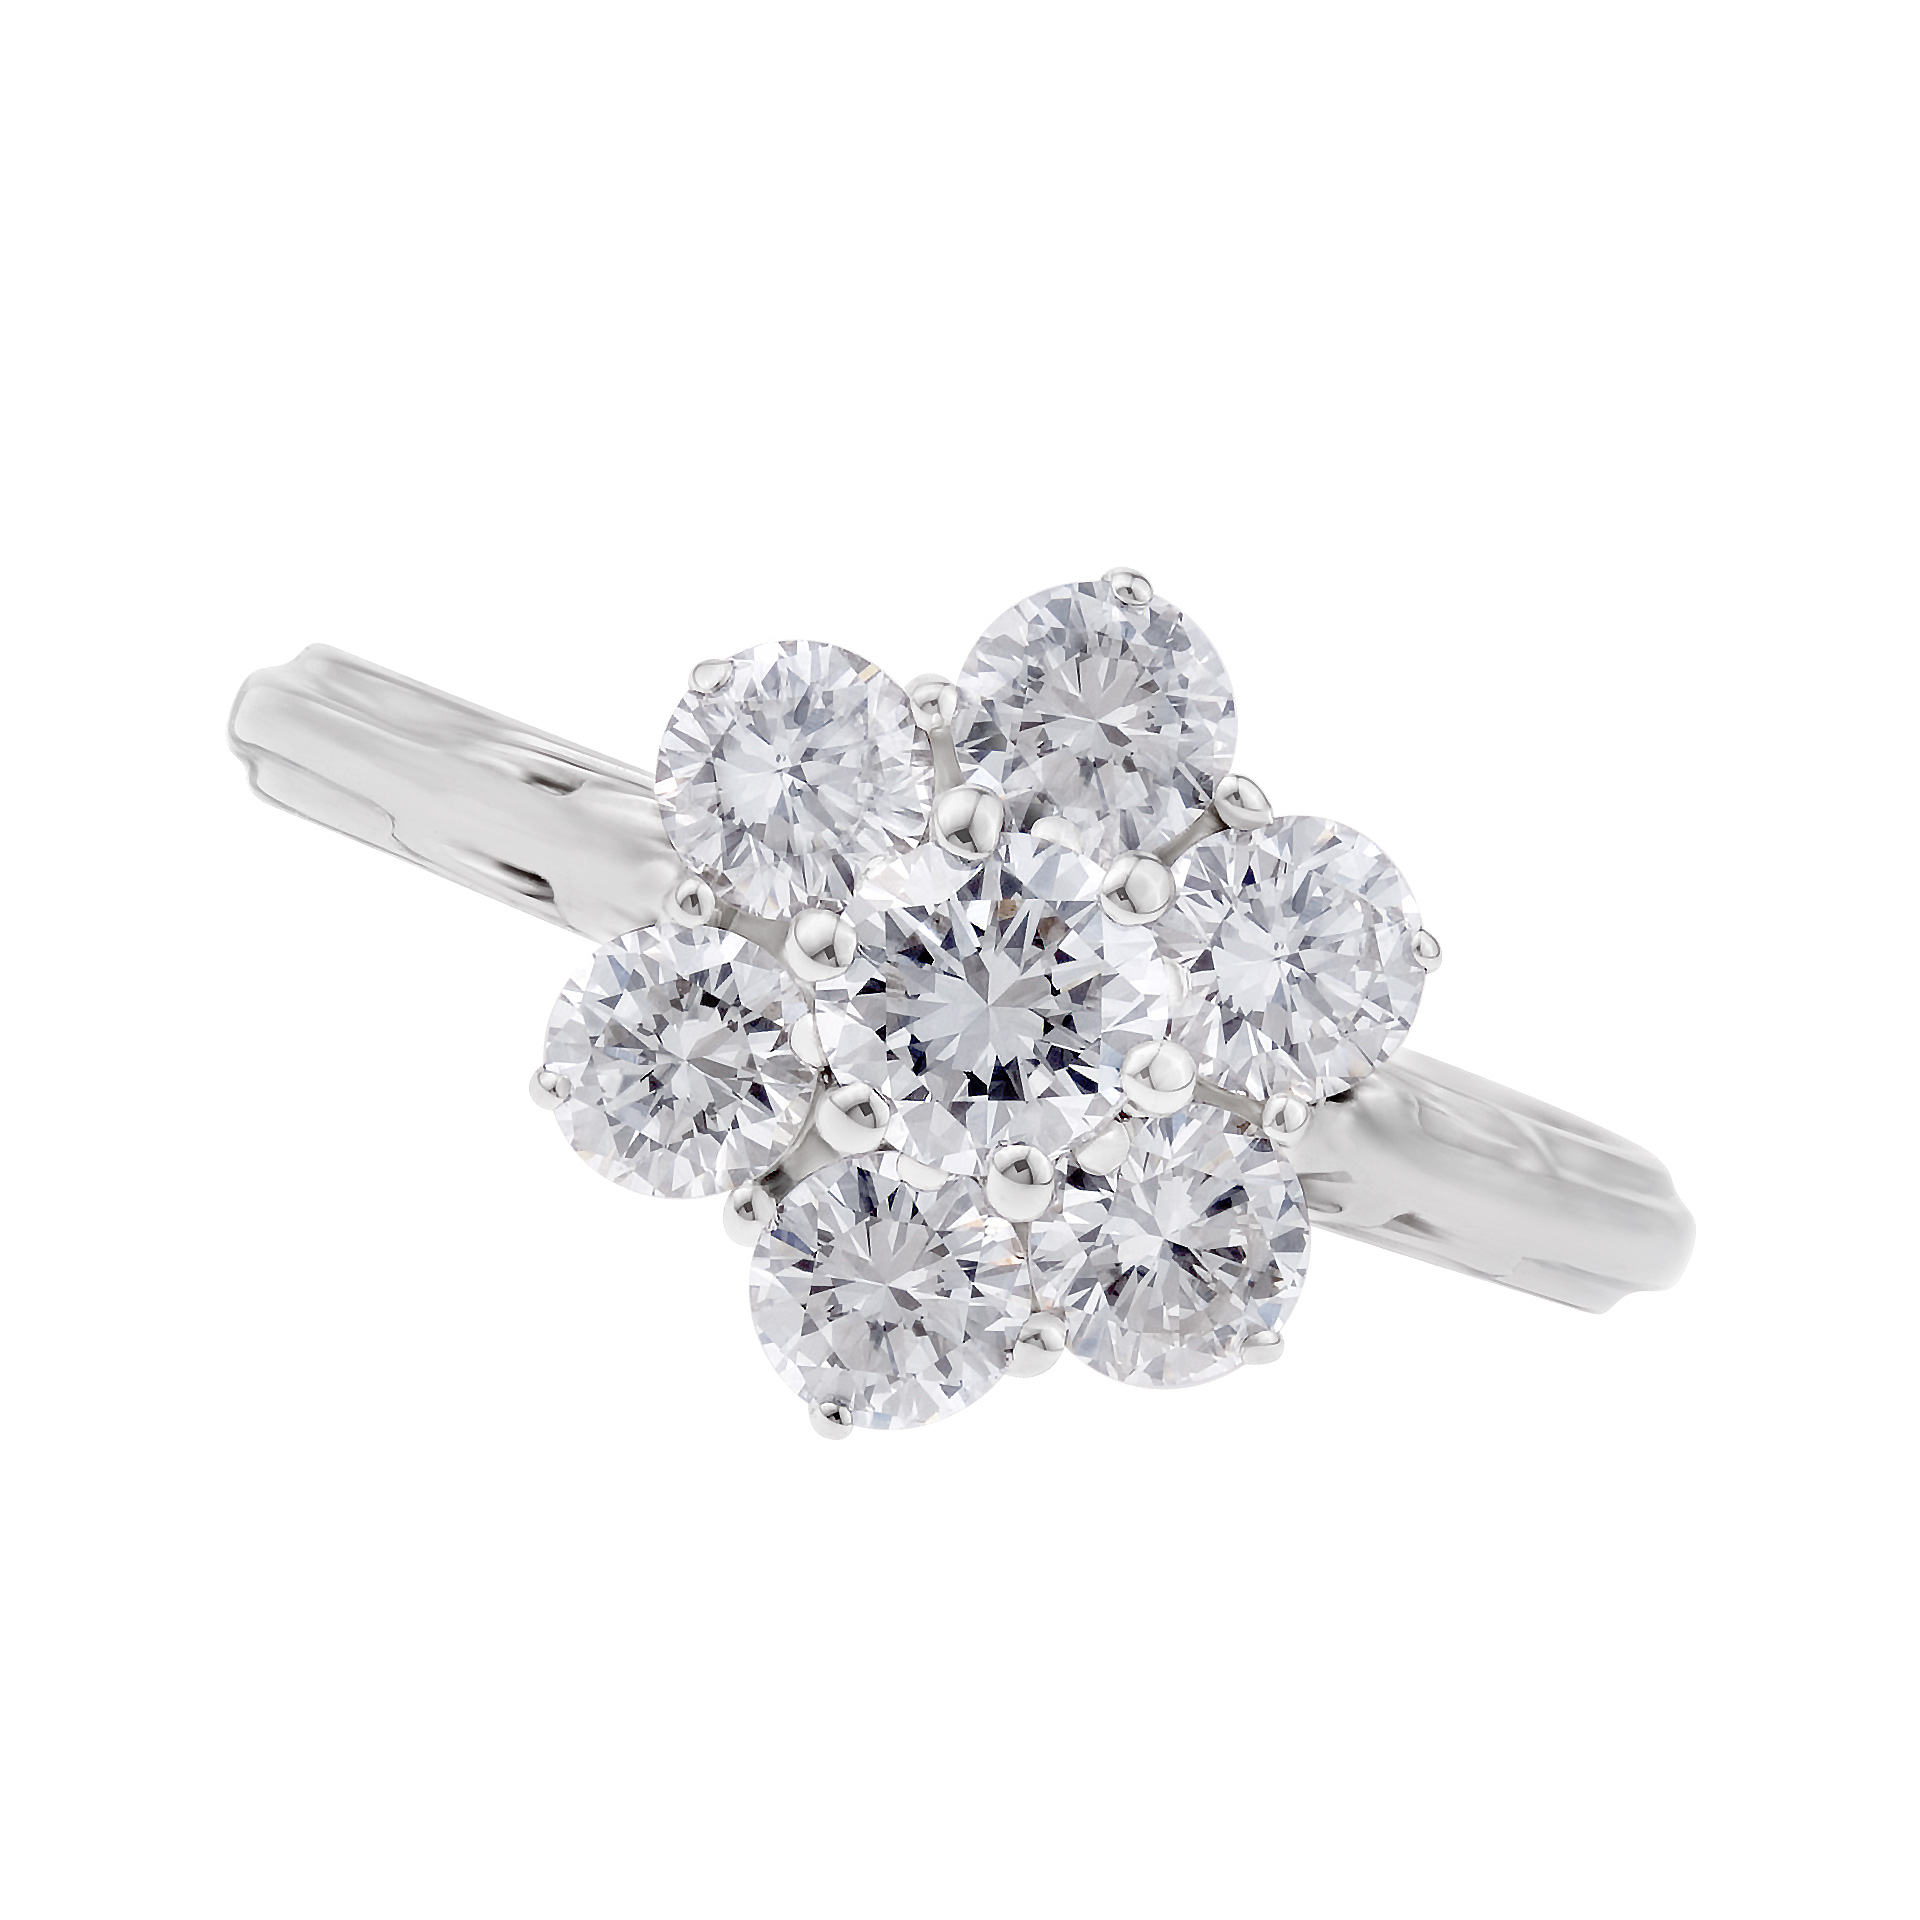 Flower diamond ring in 18k white gold. 1.20 carats (G-H, VS). Size 7 image 1